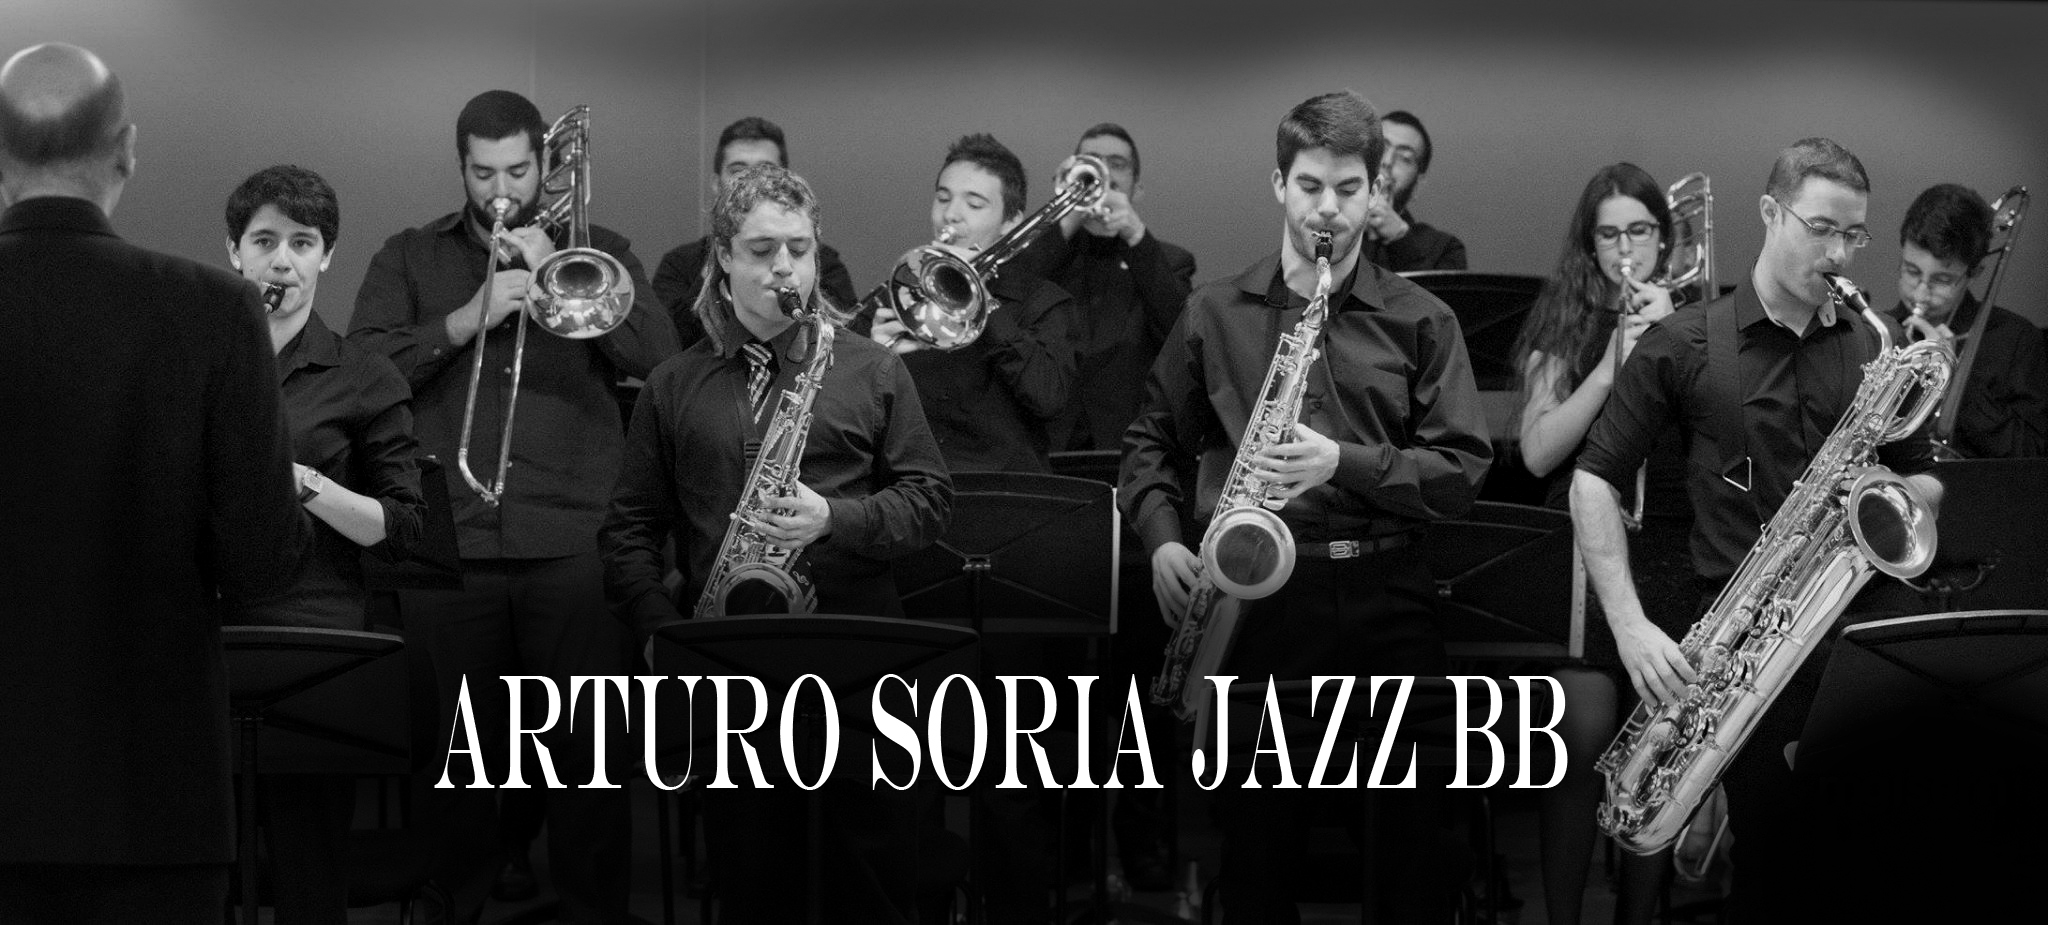 Arturo Soria Jazz BB